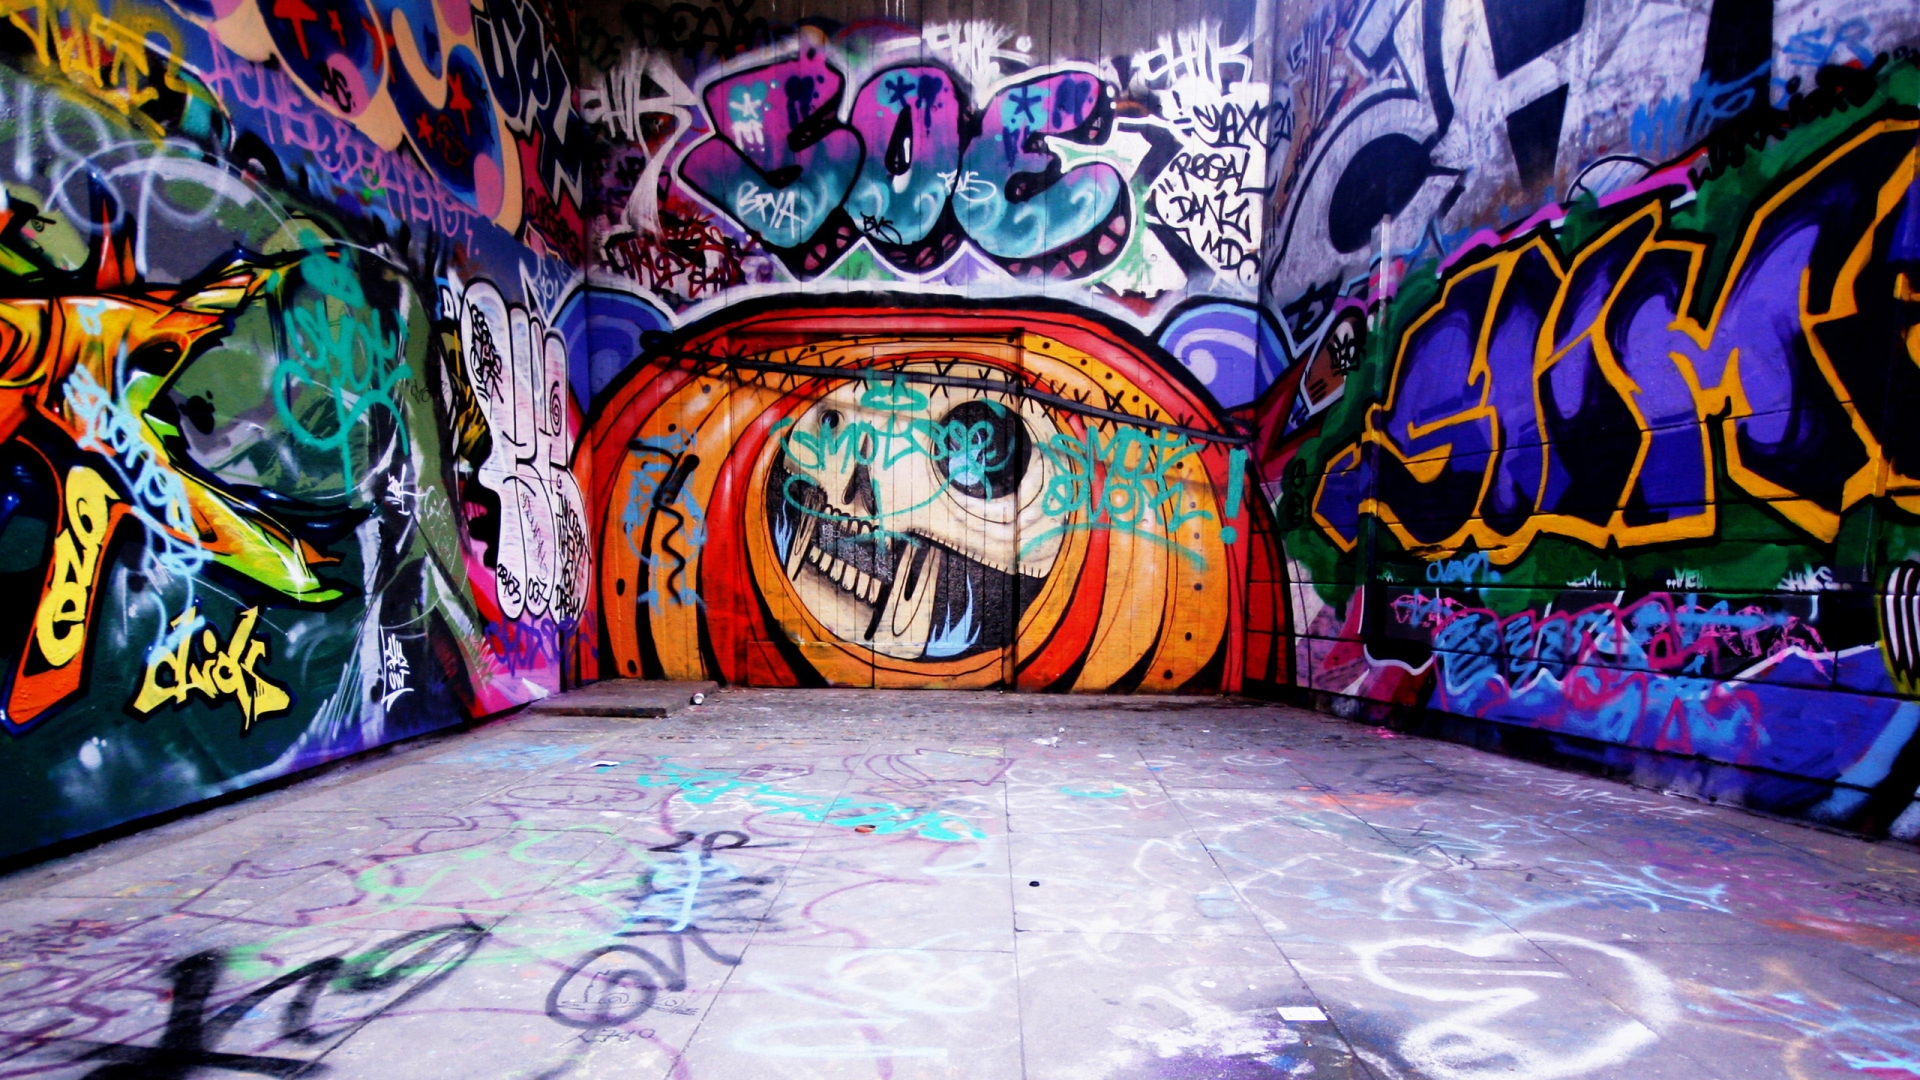 HD Wallpaper Creative Graffiti Artworks For 1080p